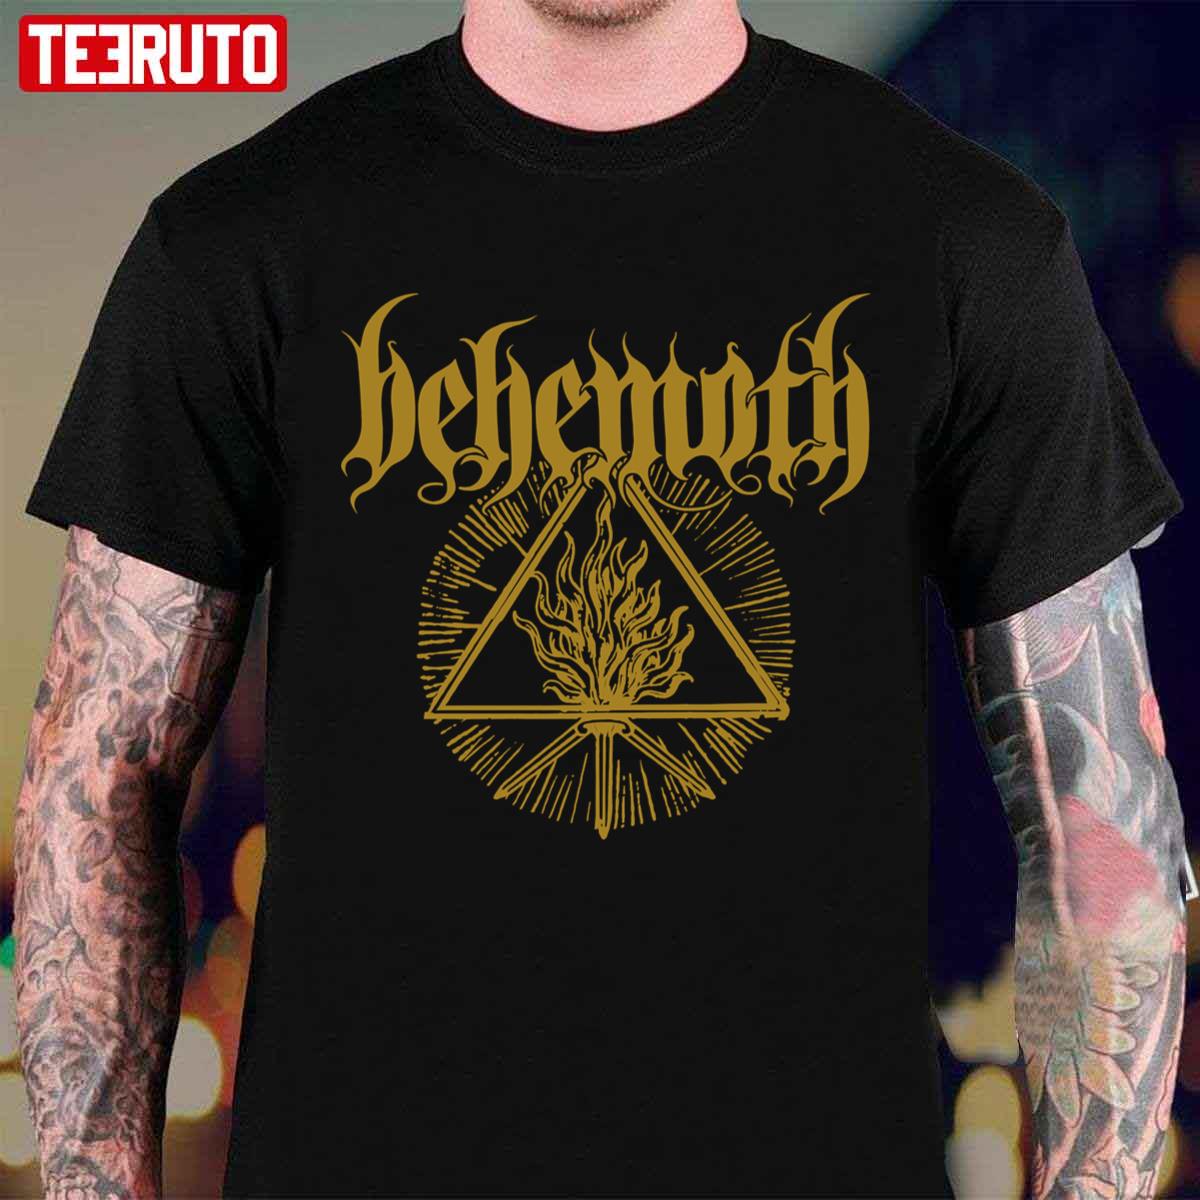 Behemoth Band Black Metal Graphic Unisex T-shirt